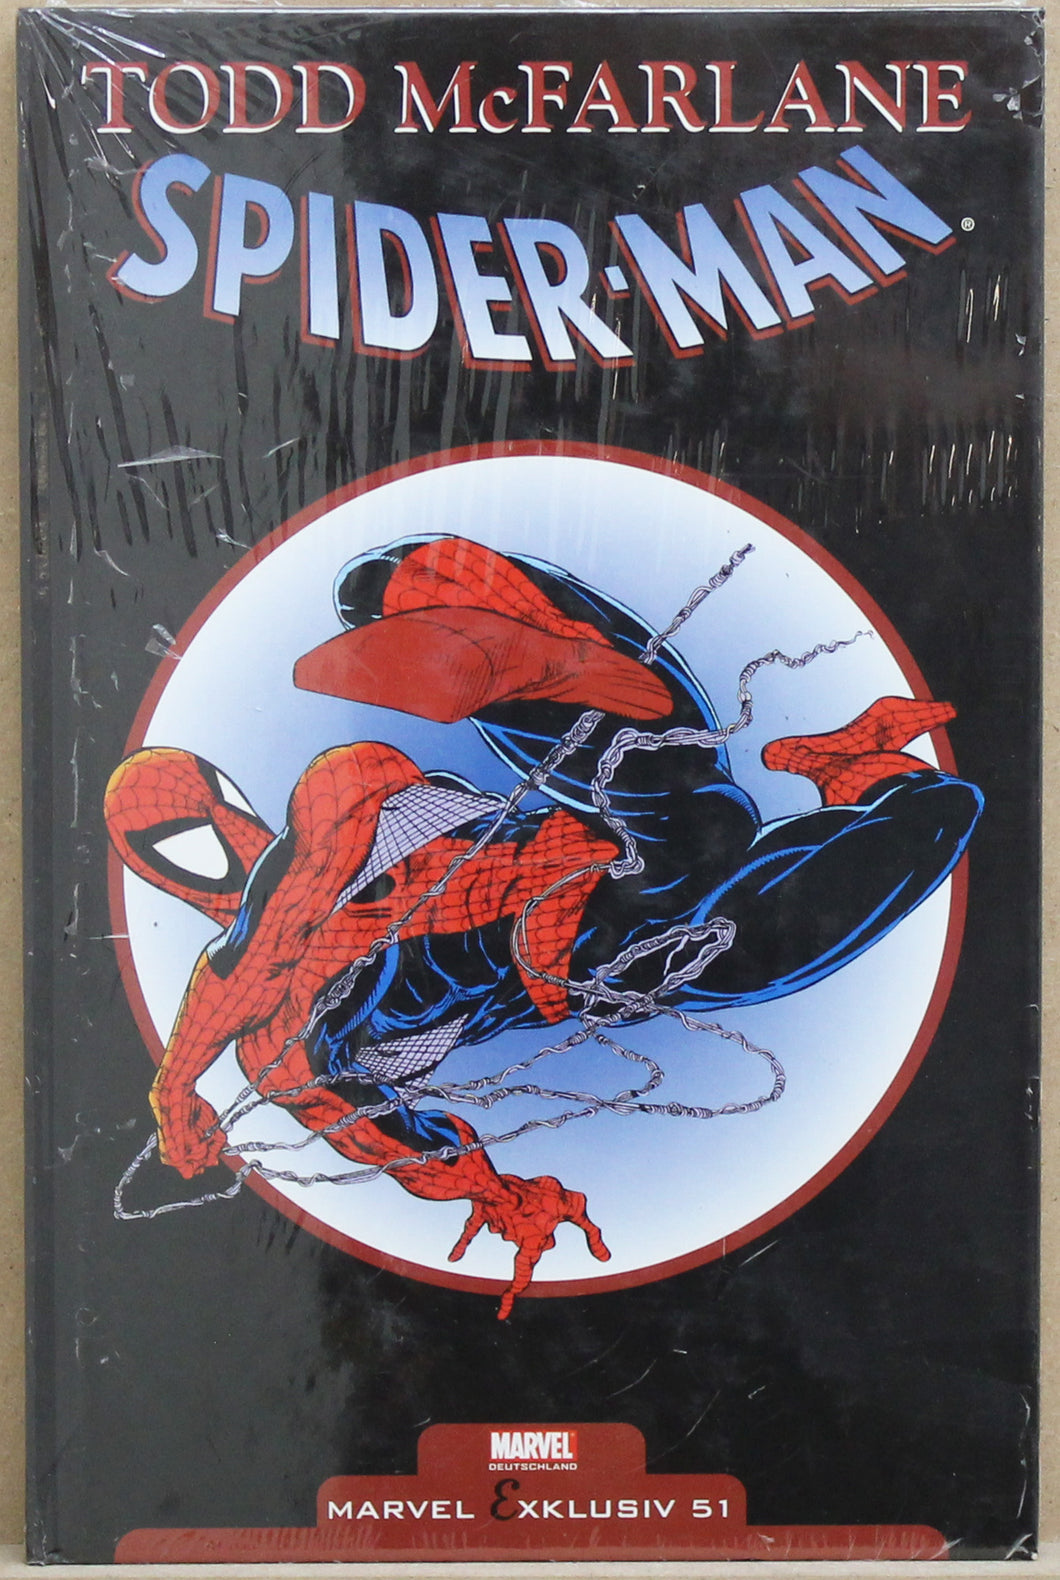 Todd McFarlane Spider-Man 2 - Marvel Exklusiv HC 51